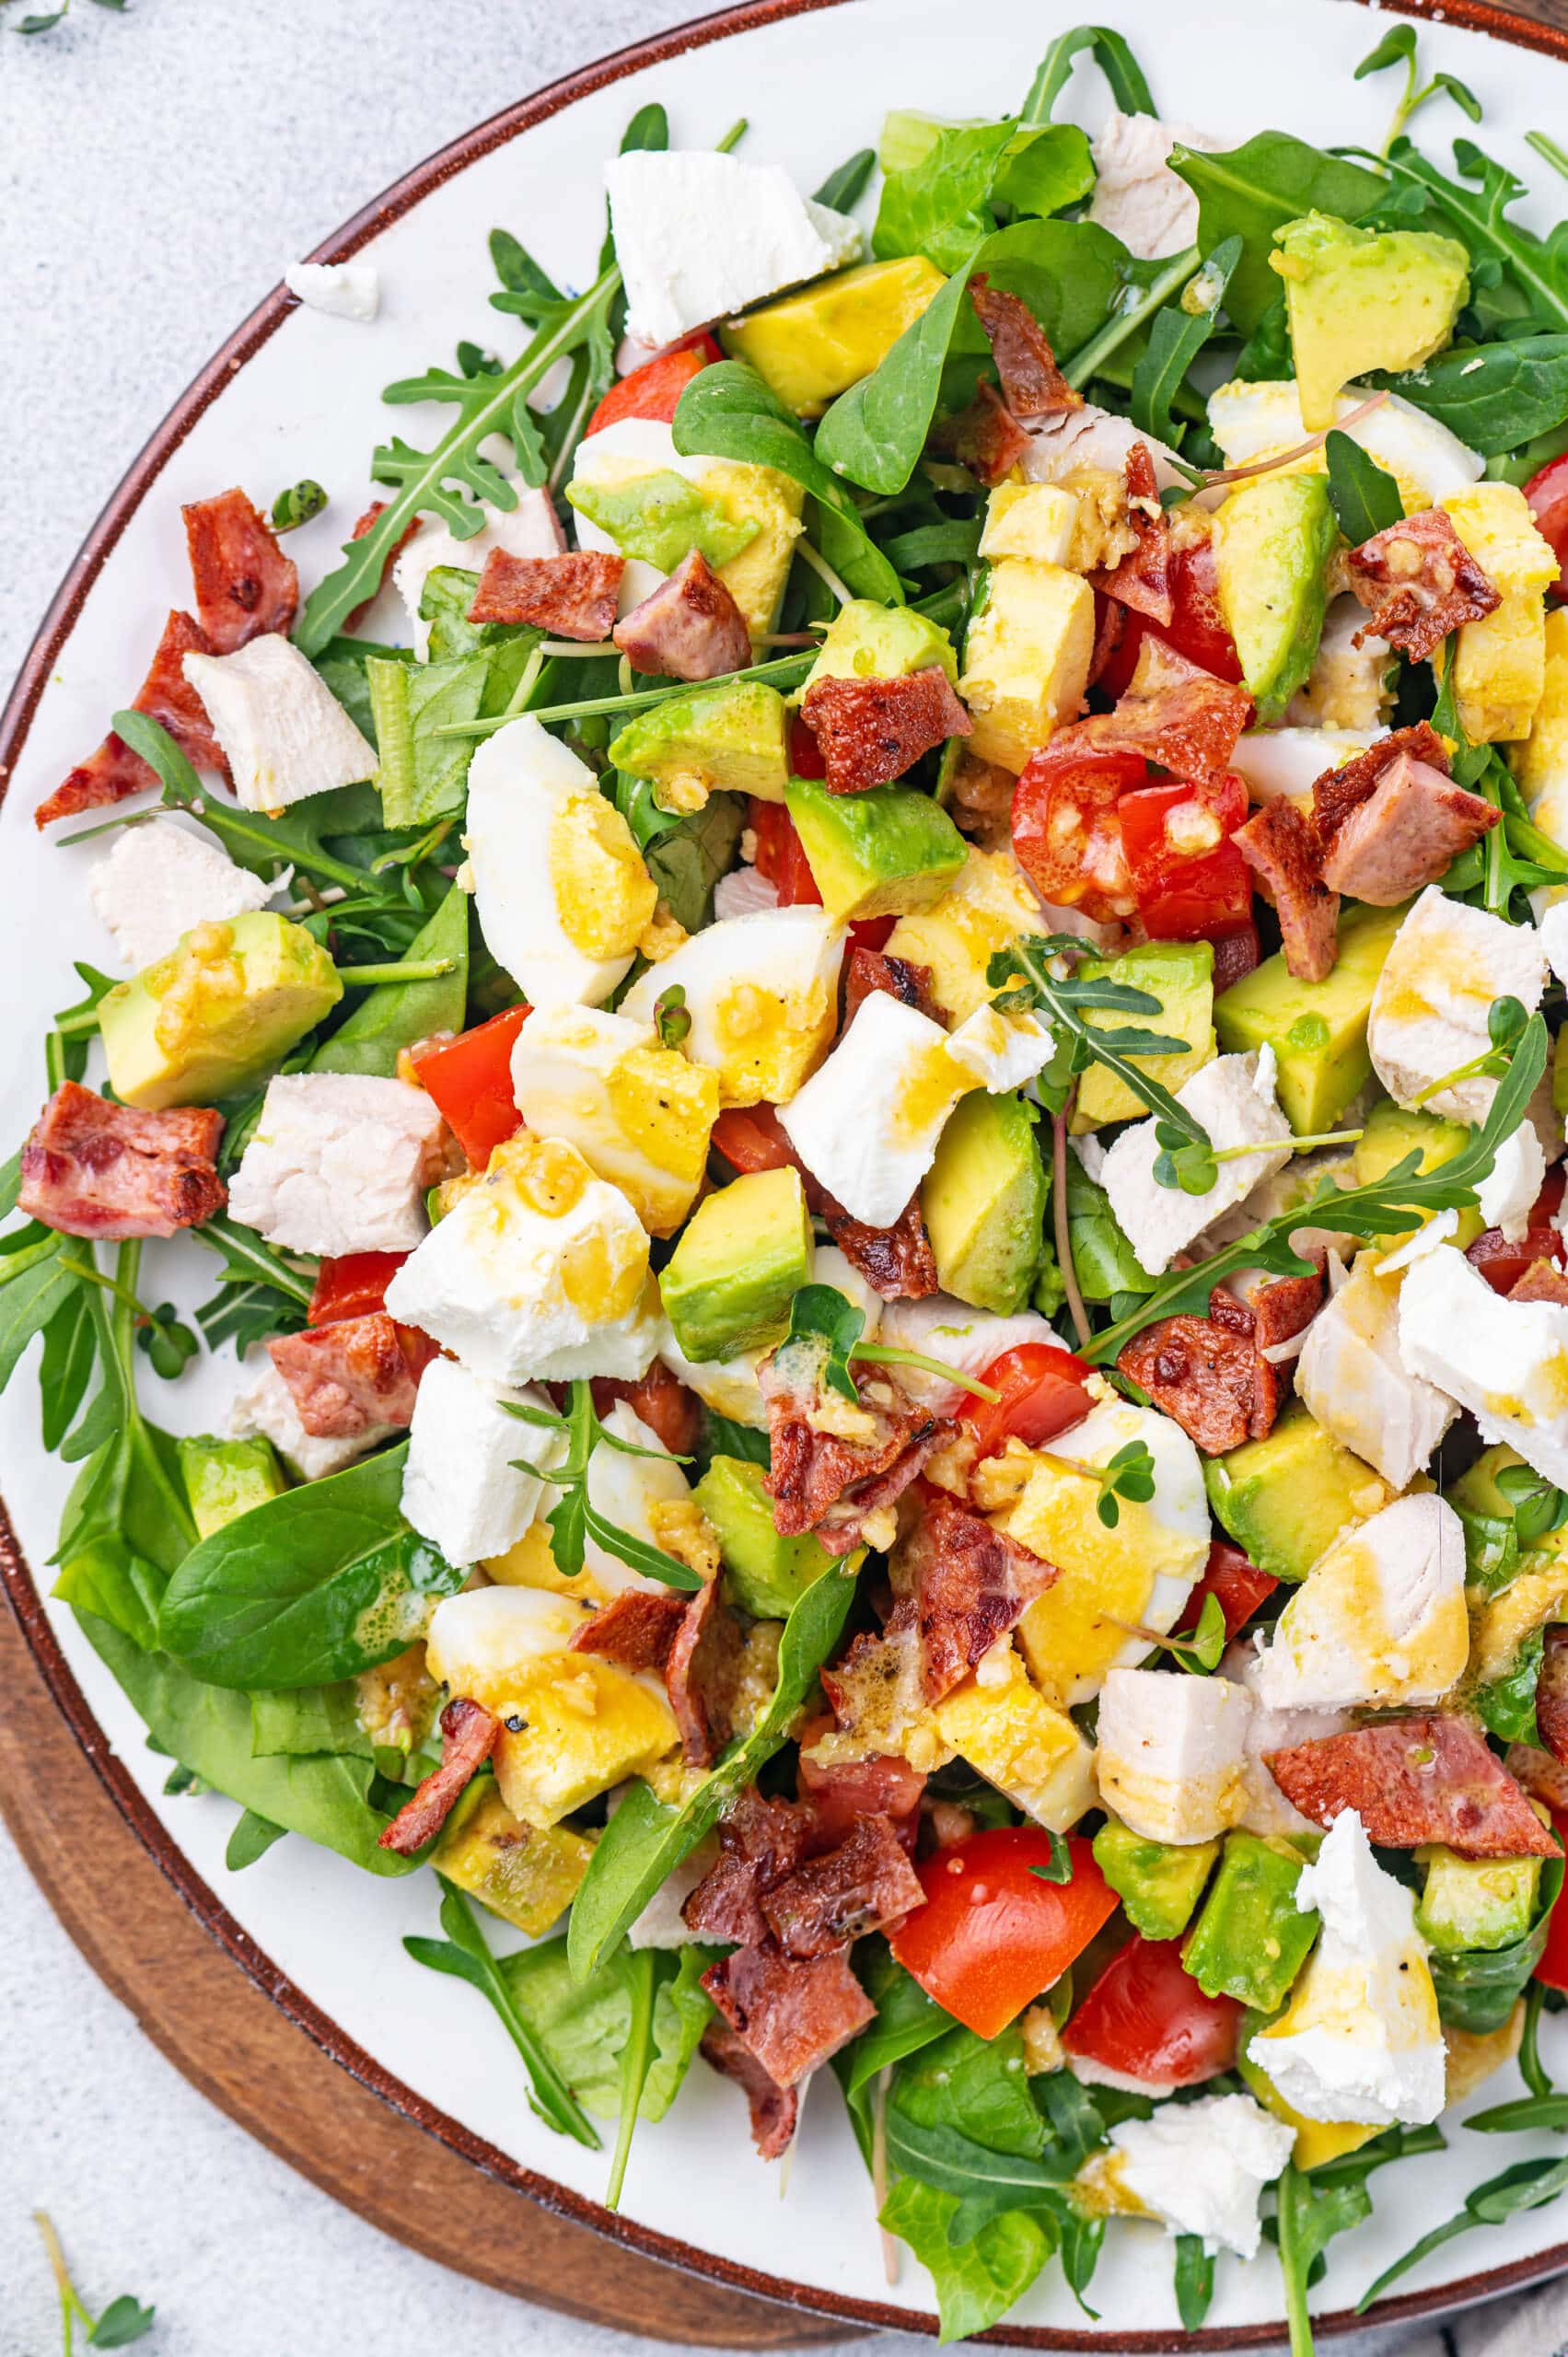 Healthy Cobb Salad with The Best Vinaigrette